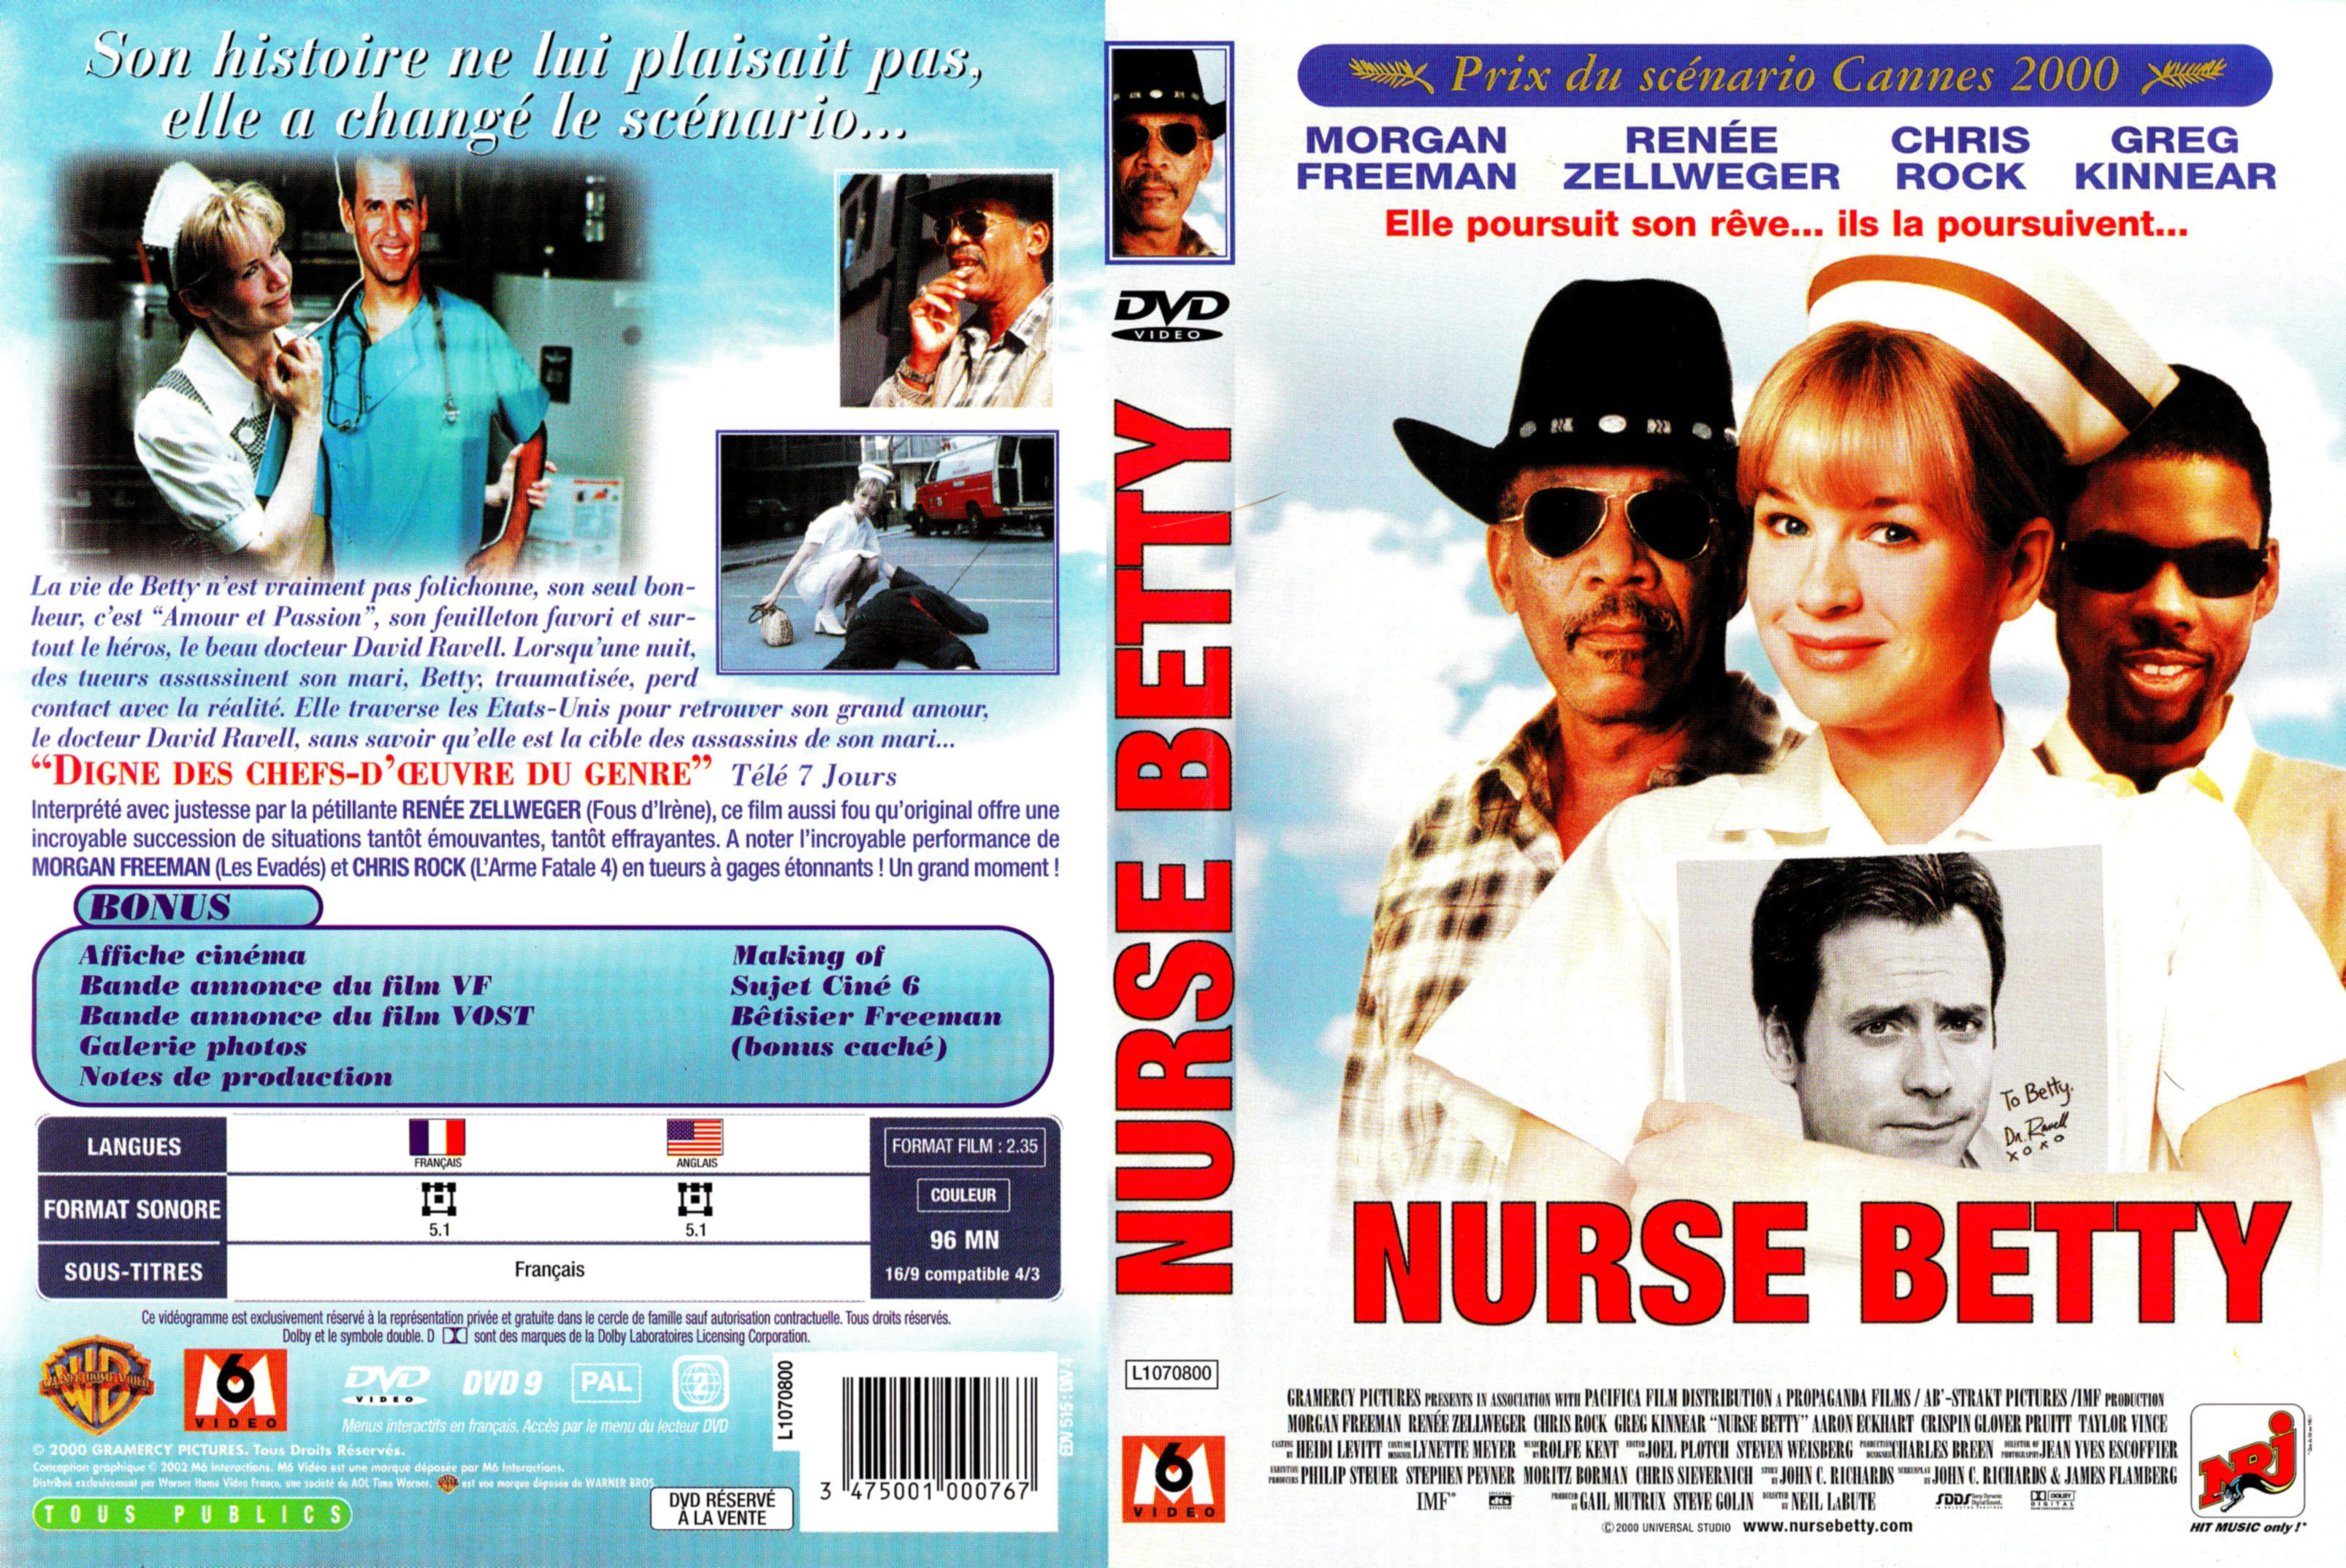 Jaquette DVD Nurse Betty v2